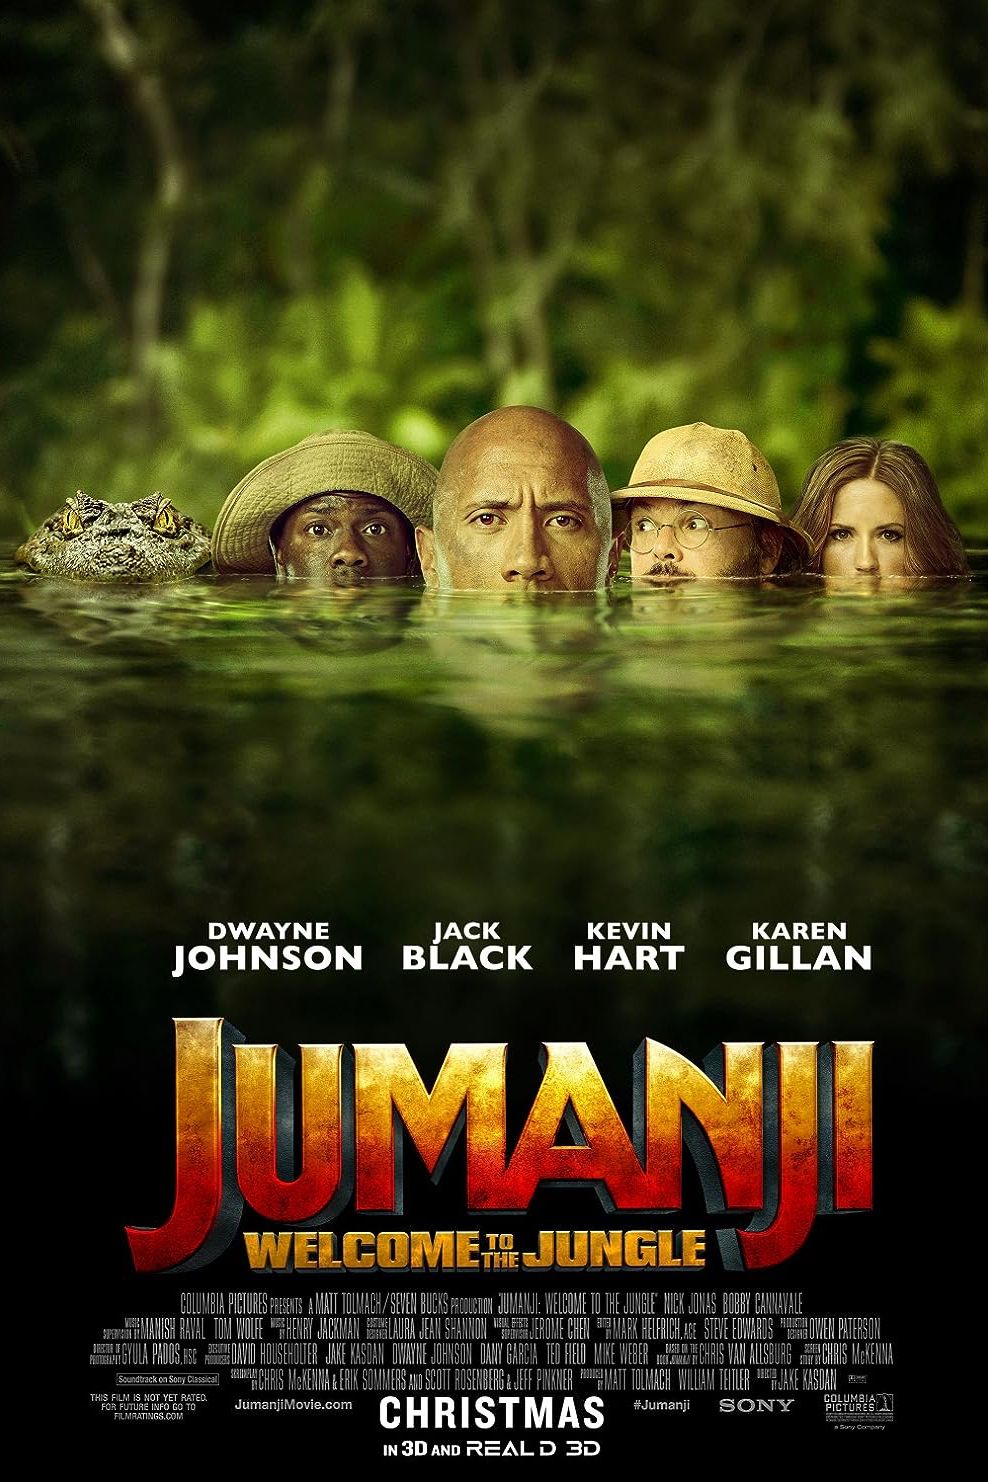 Jumanji Welcome to the Jungle Movie Poster